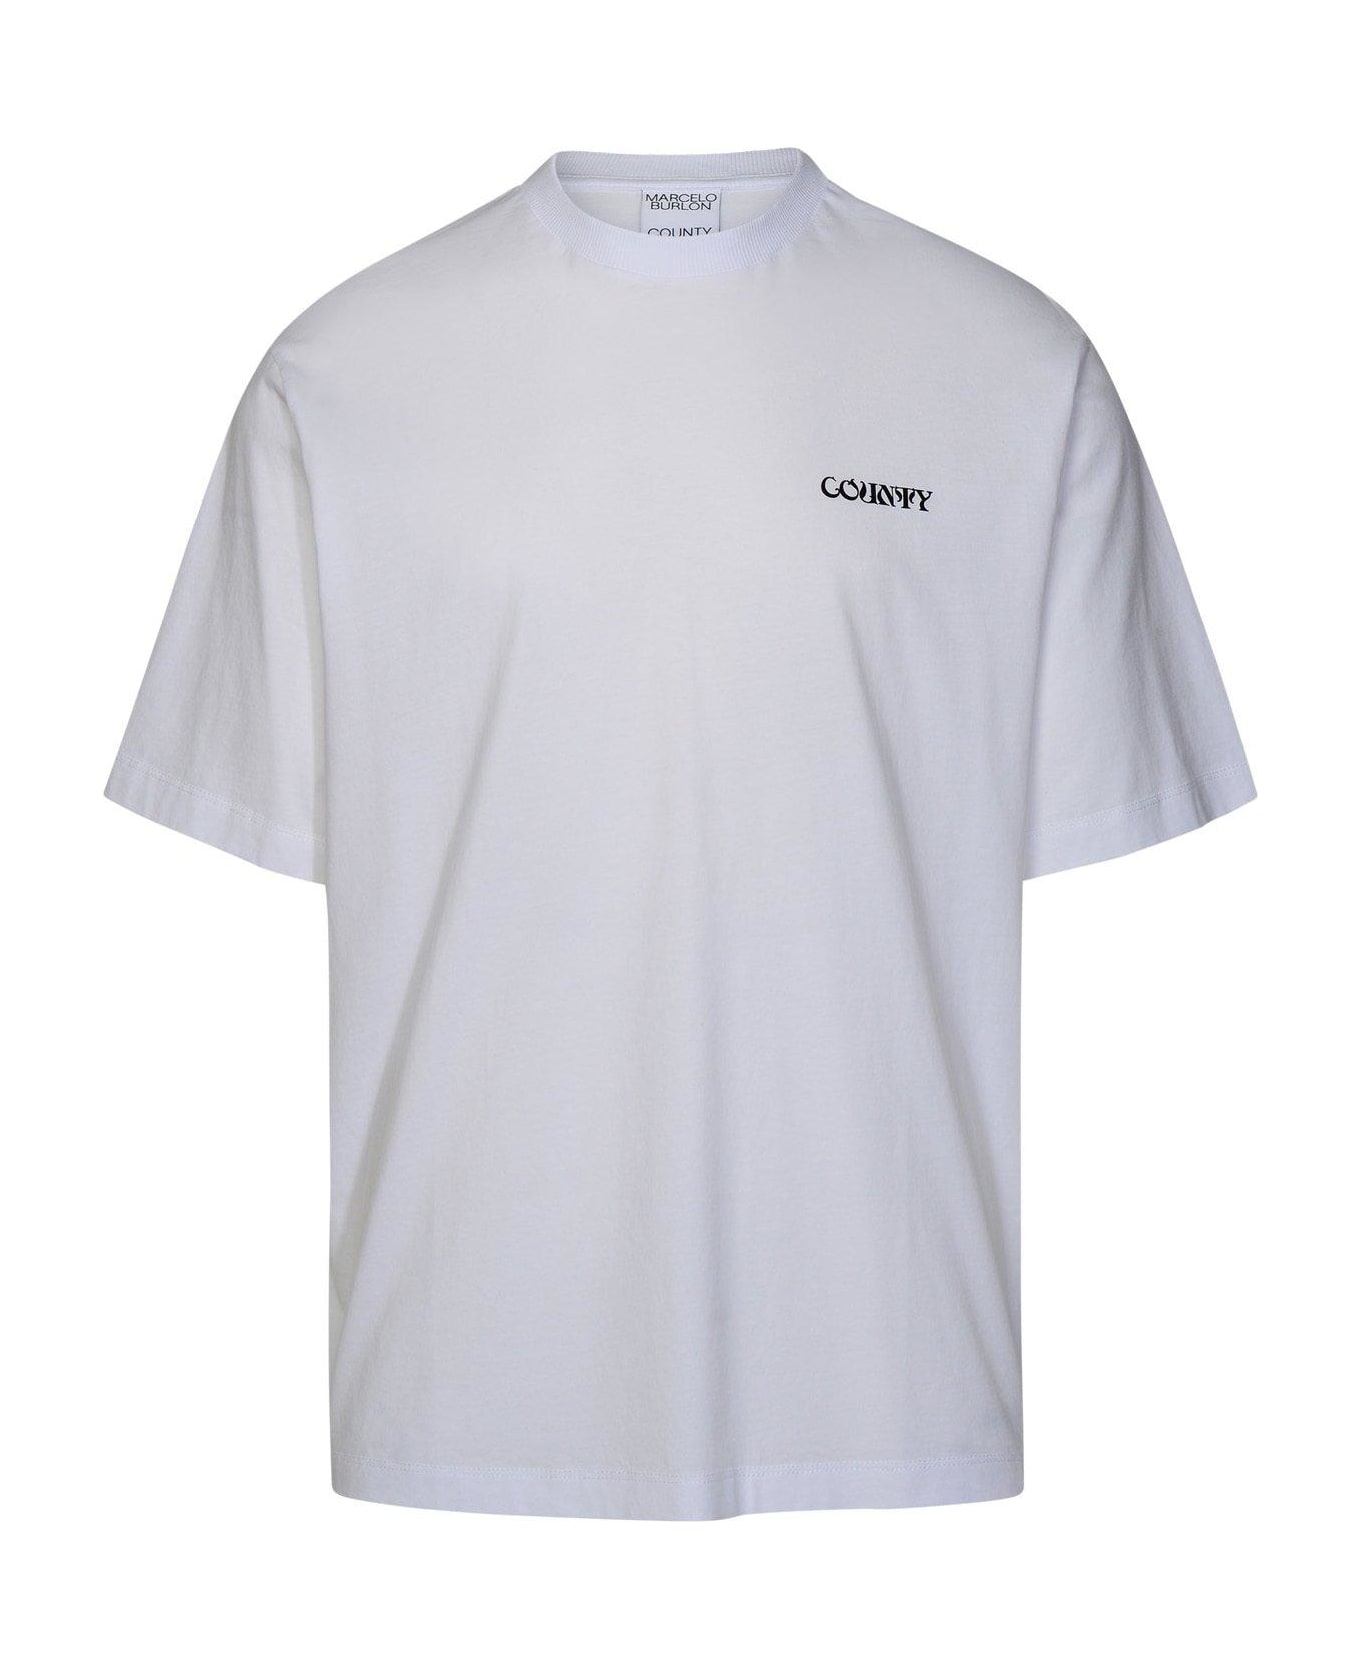 Marcelo Burlon County Printed Crewneck T-shirt - Bianco シャツ